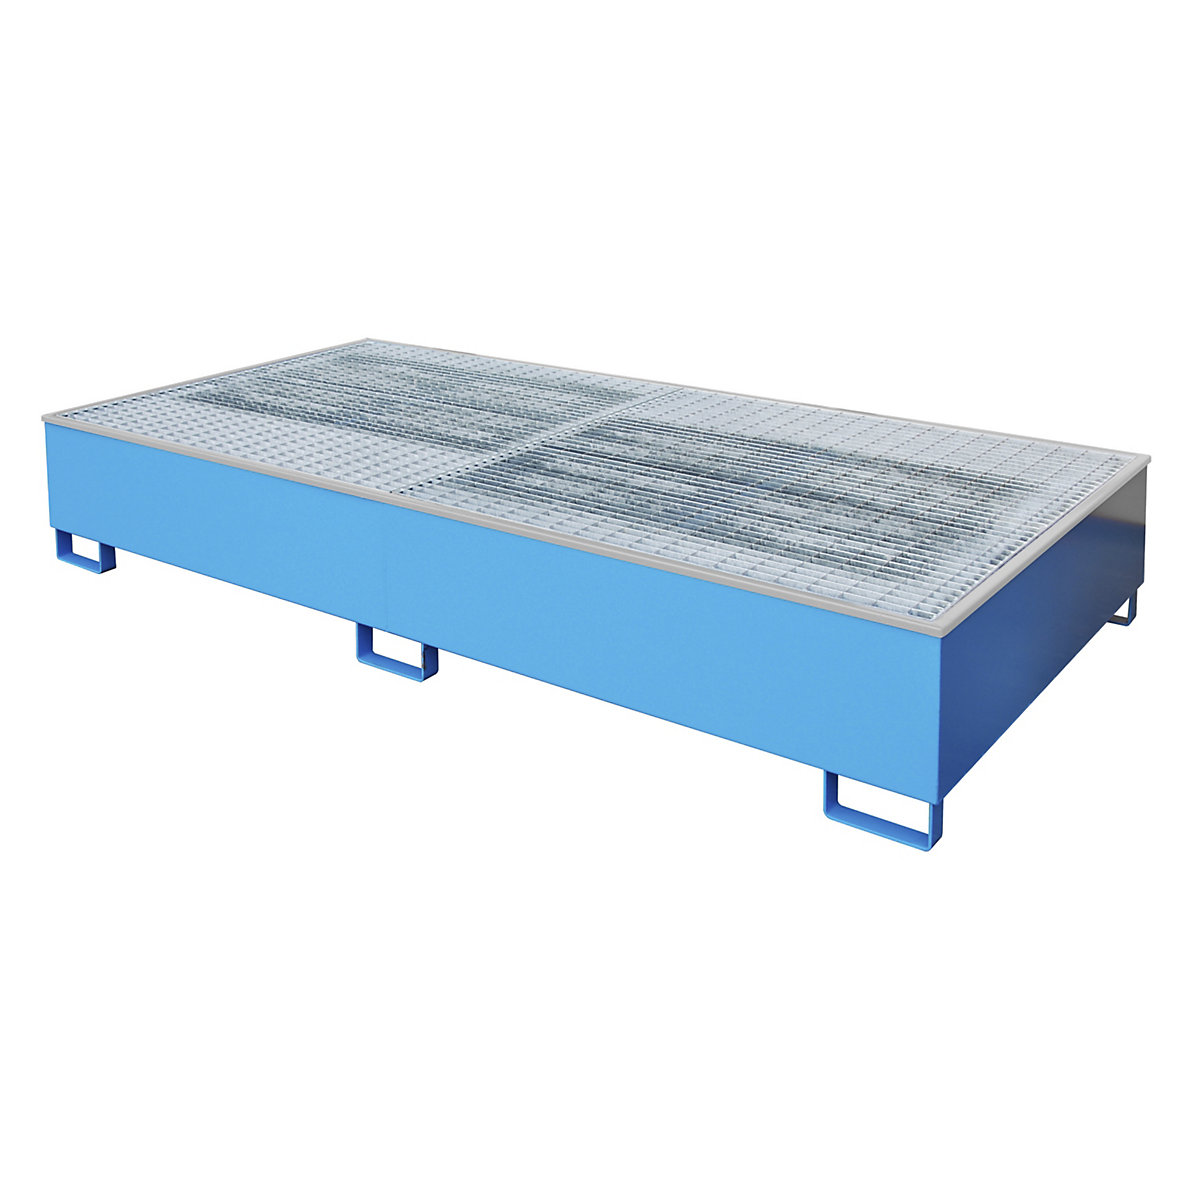 Steel sump tray with PE insert - eurokraft pro